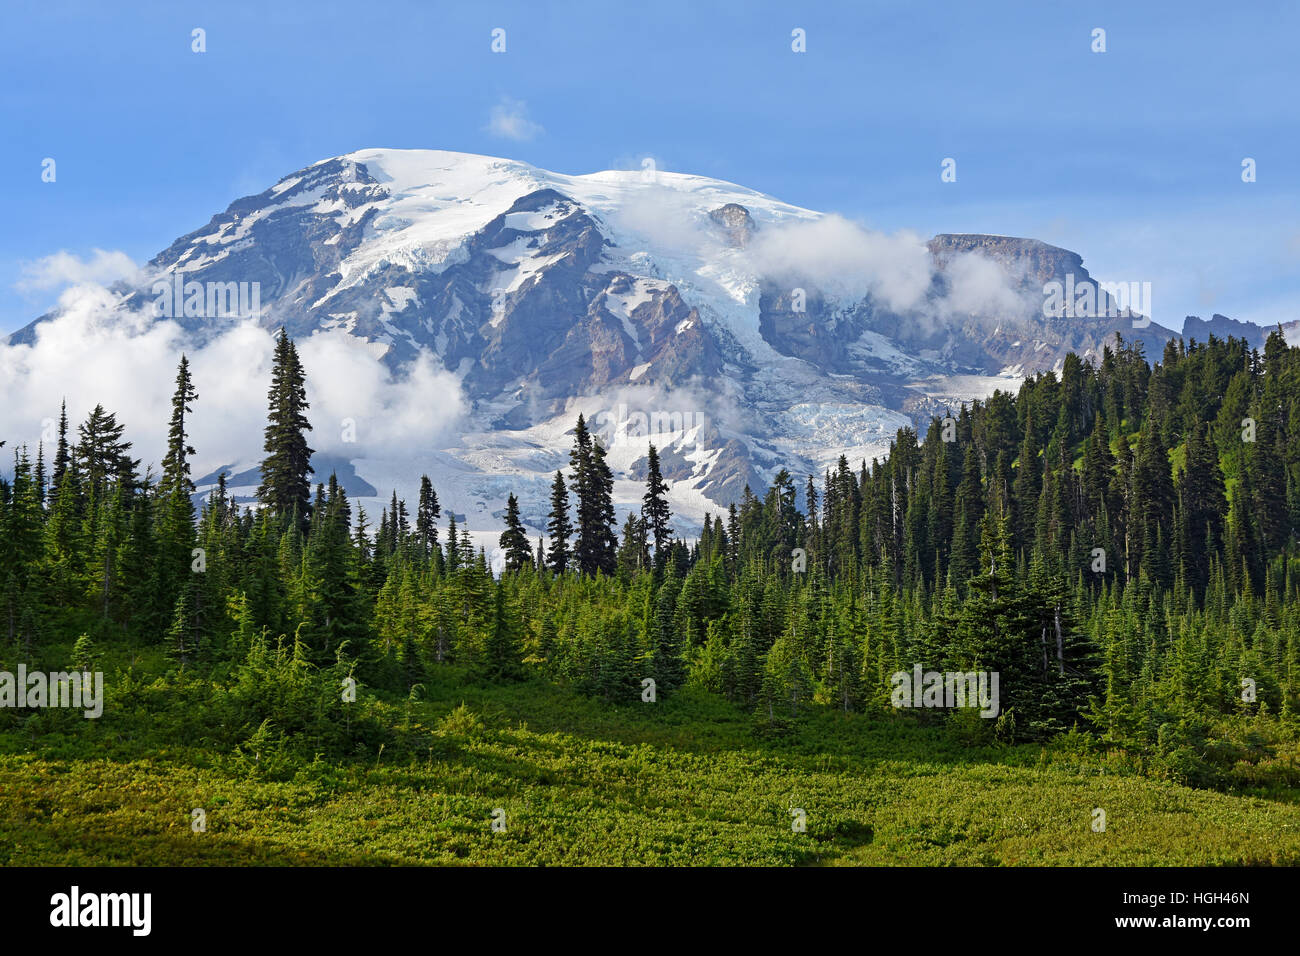 Snow-capped summit of Mount Rainier, Mount Rainier National Park, Cascade Range, Washington, Pacific Northwest, USA Stock Photo